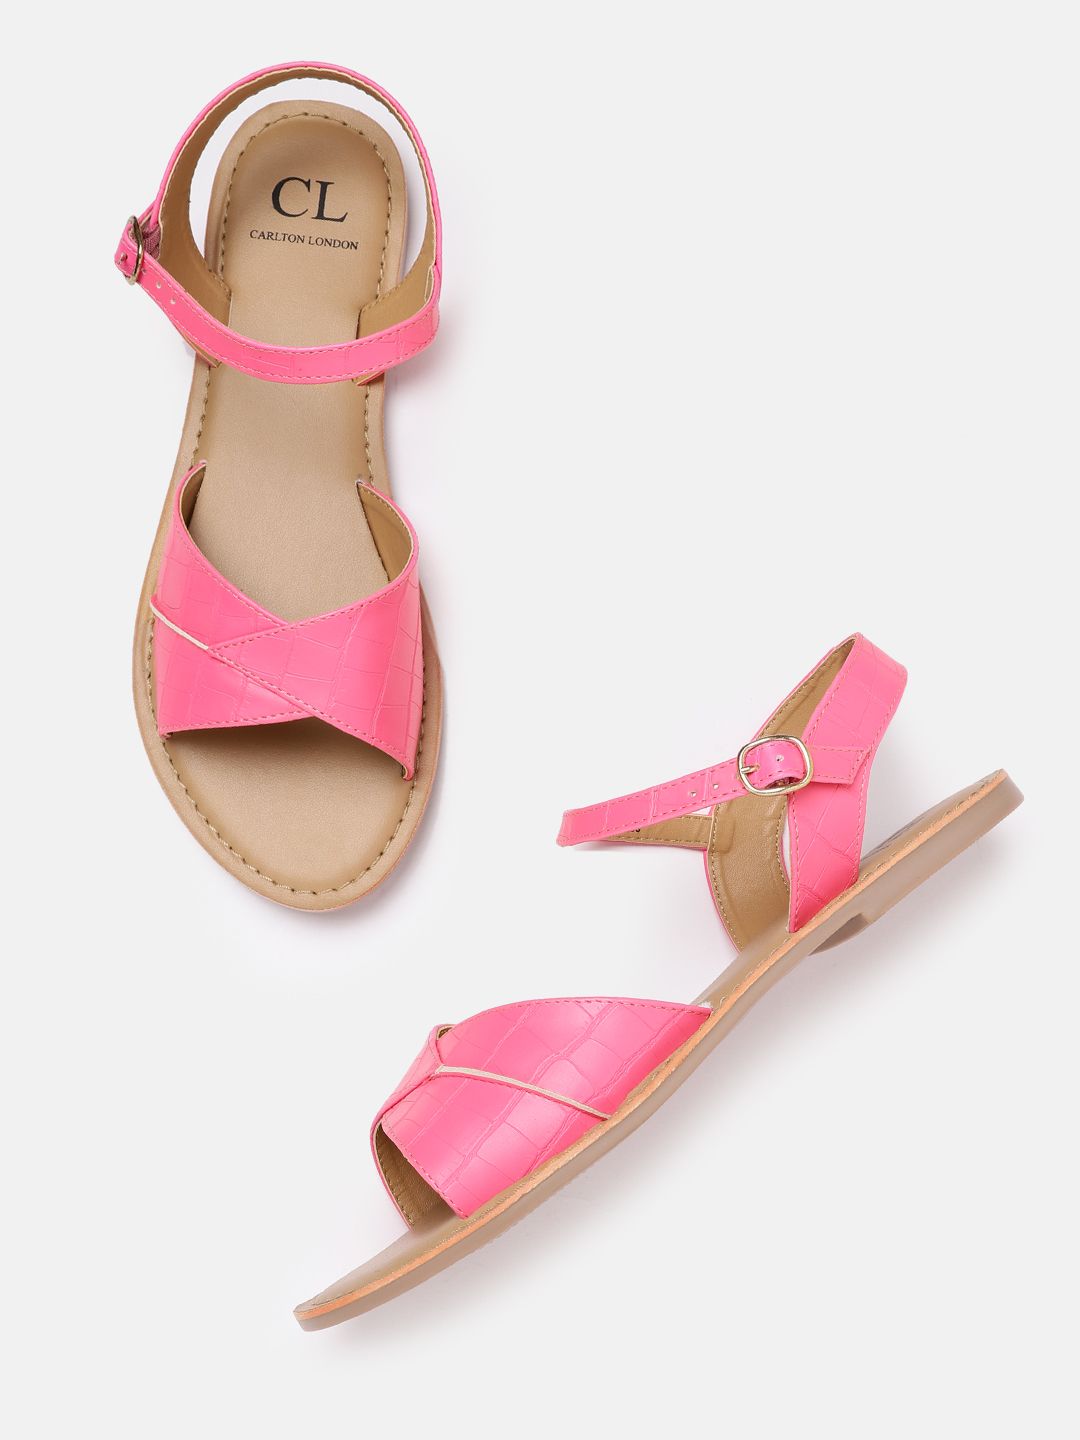 Carlton London Women Pink Croc Textured Open Toe Flats Price in India